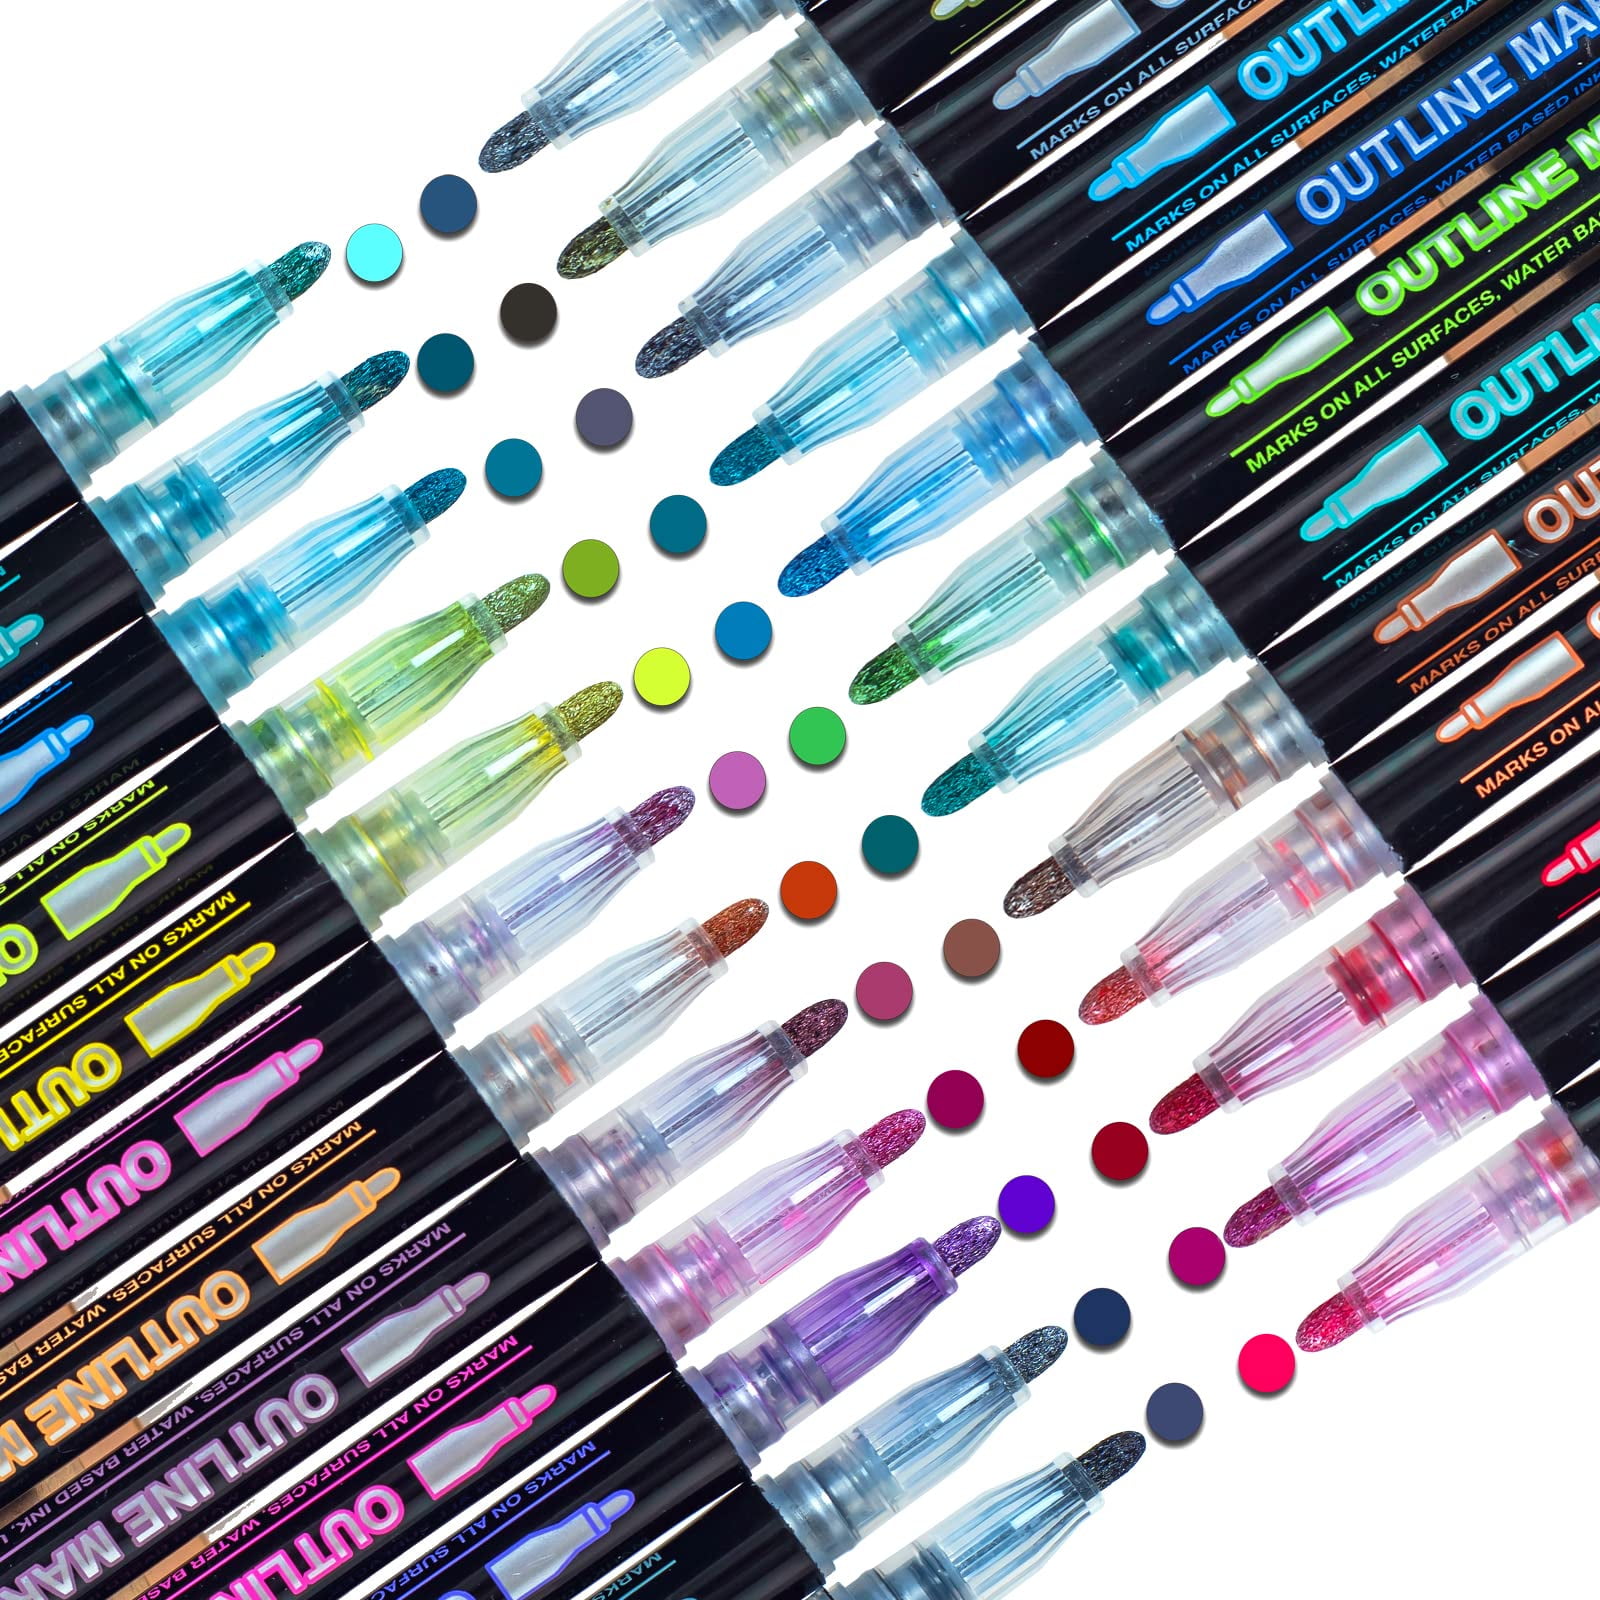 AEXONIZ TOYS Double Line Outline Pen, Self-outline Metallic  Markers, 12 Colors - Glitter Double Outline Marker Pen